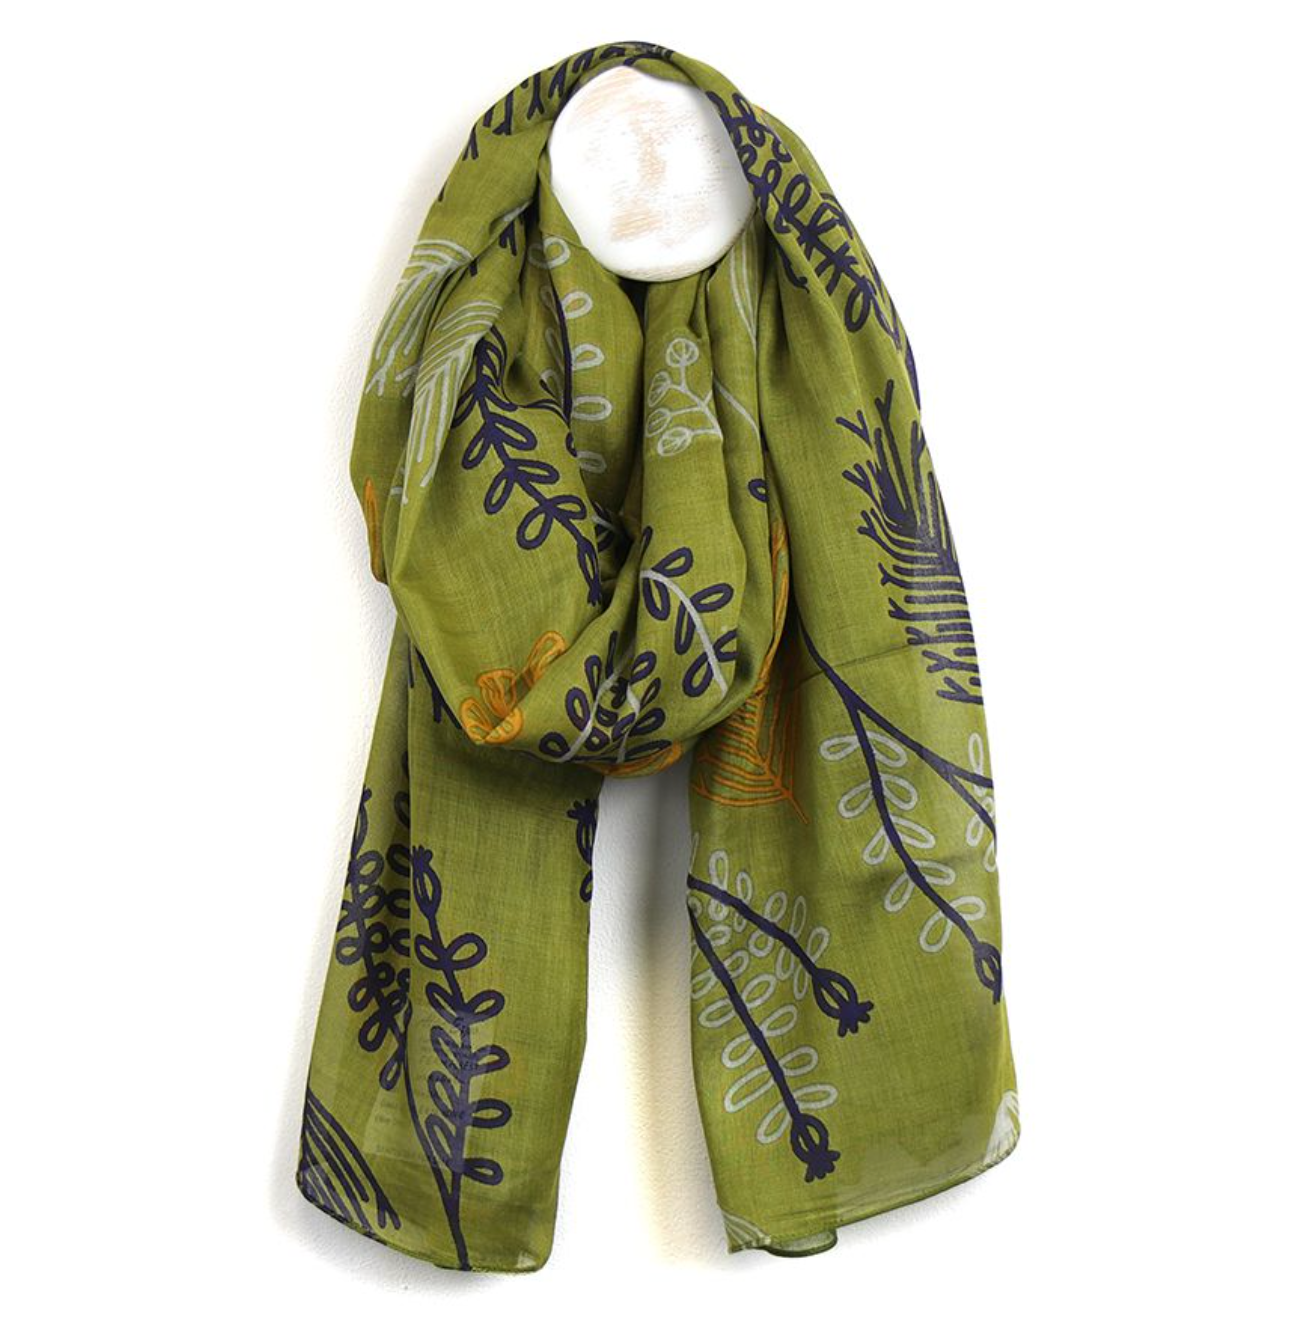 Olive green fern print organic cotton scarf